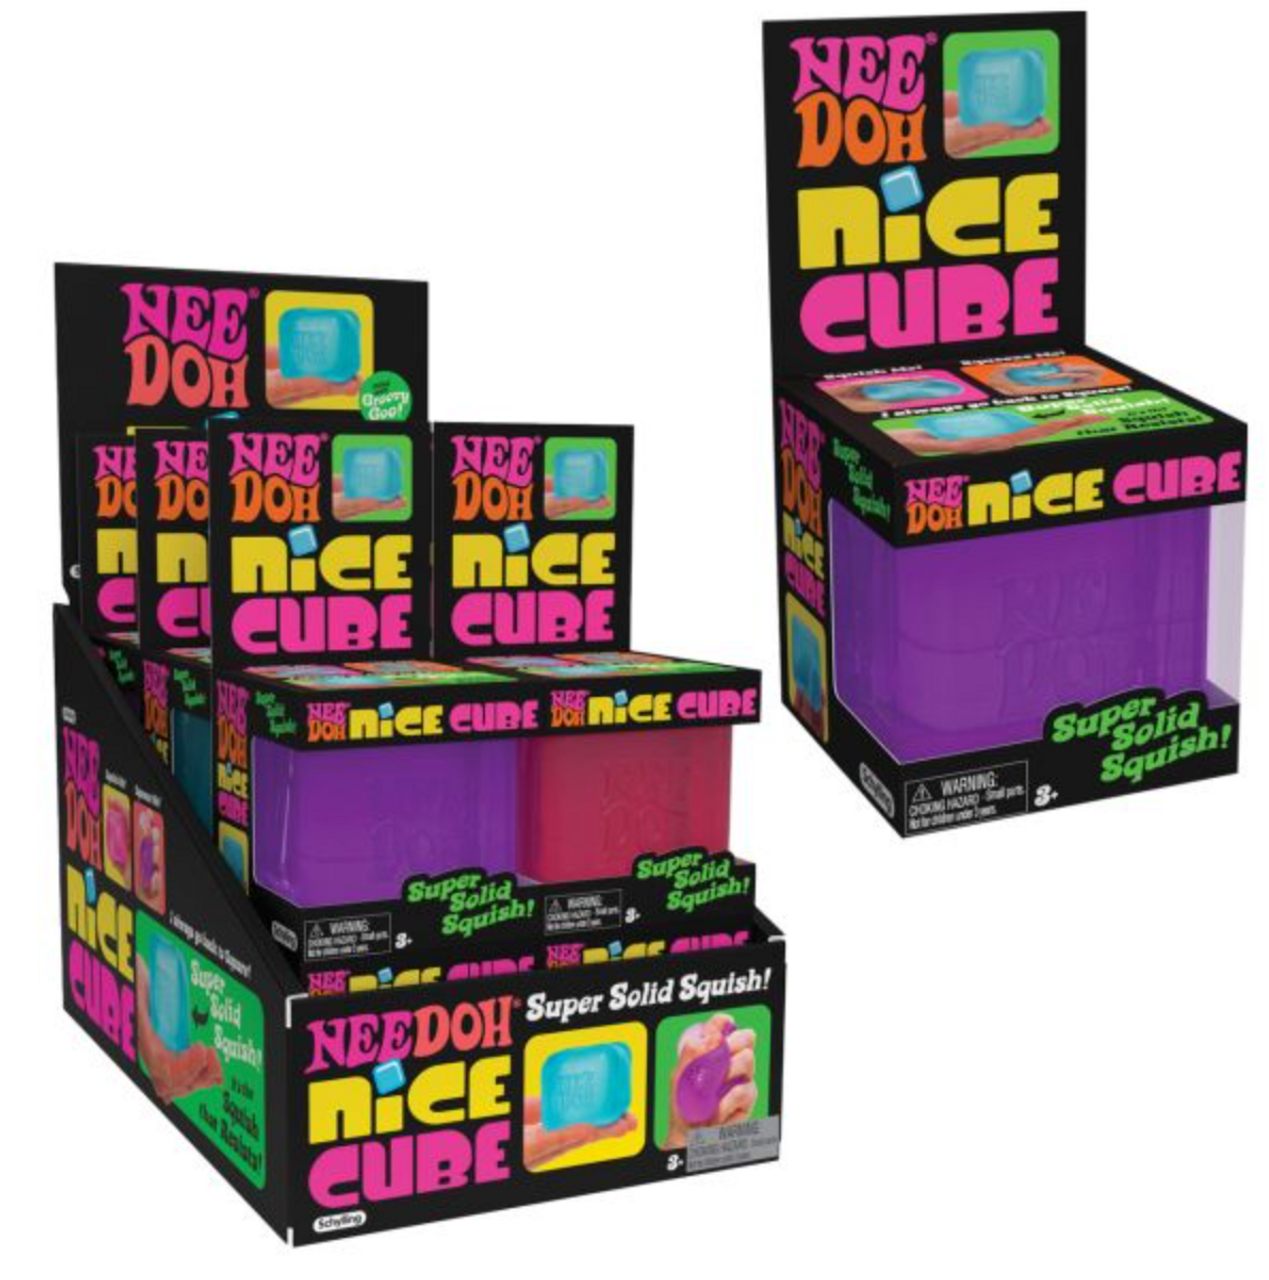 Nee doh Nice Cubes